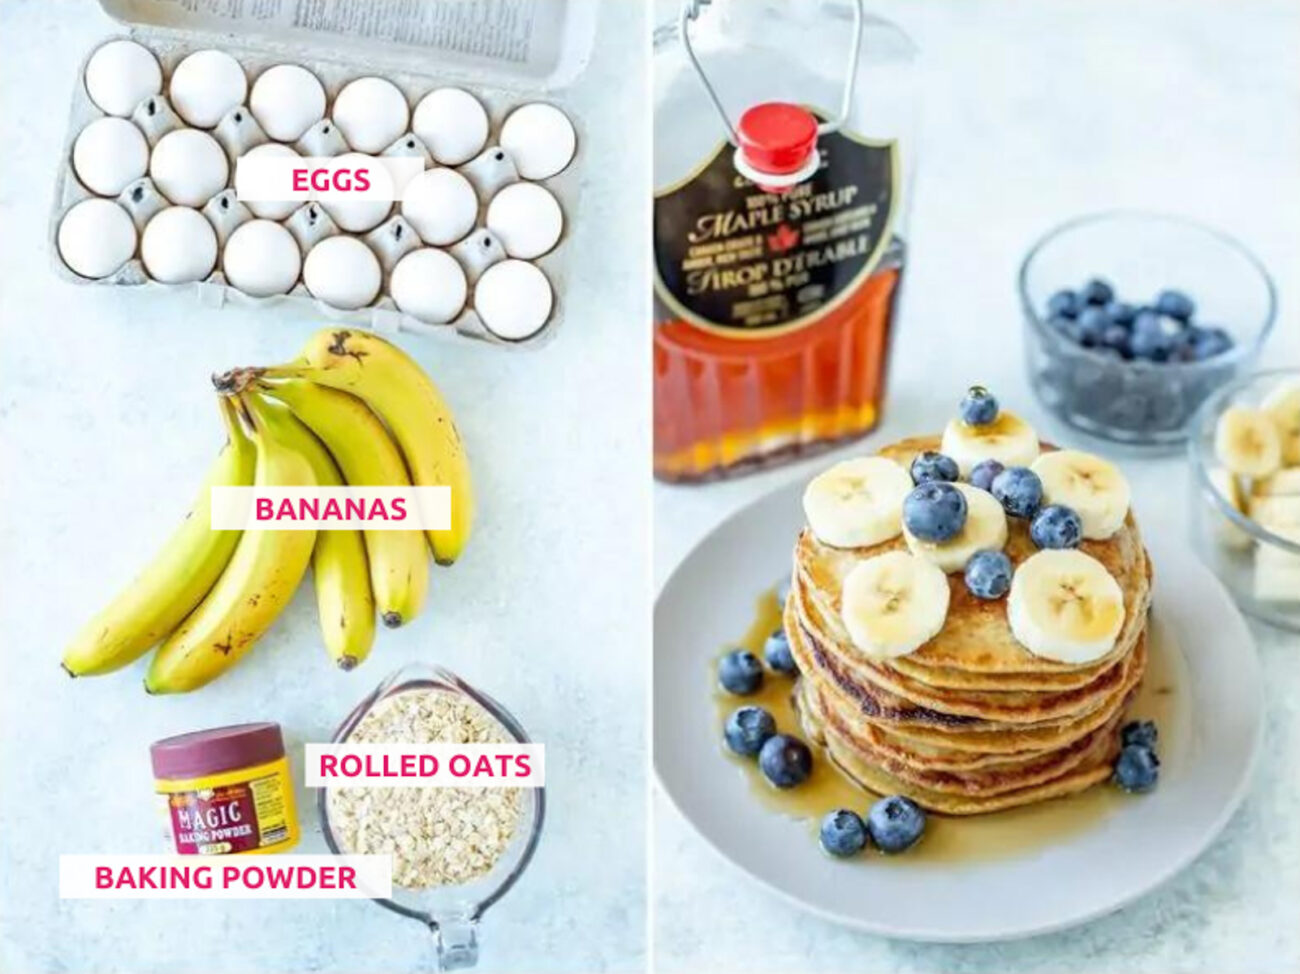 Ingredients for banana oat pancakes: eggs, bananas, oats, baking powder.